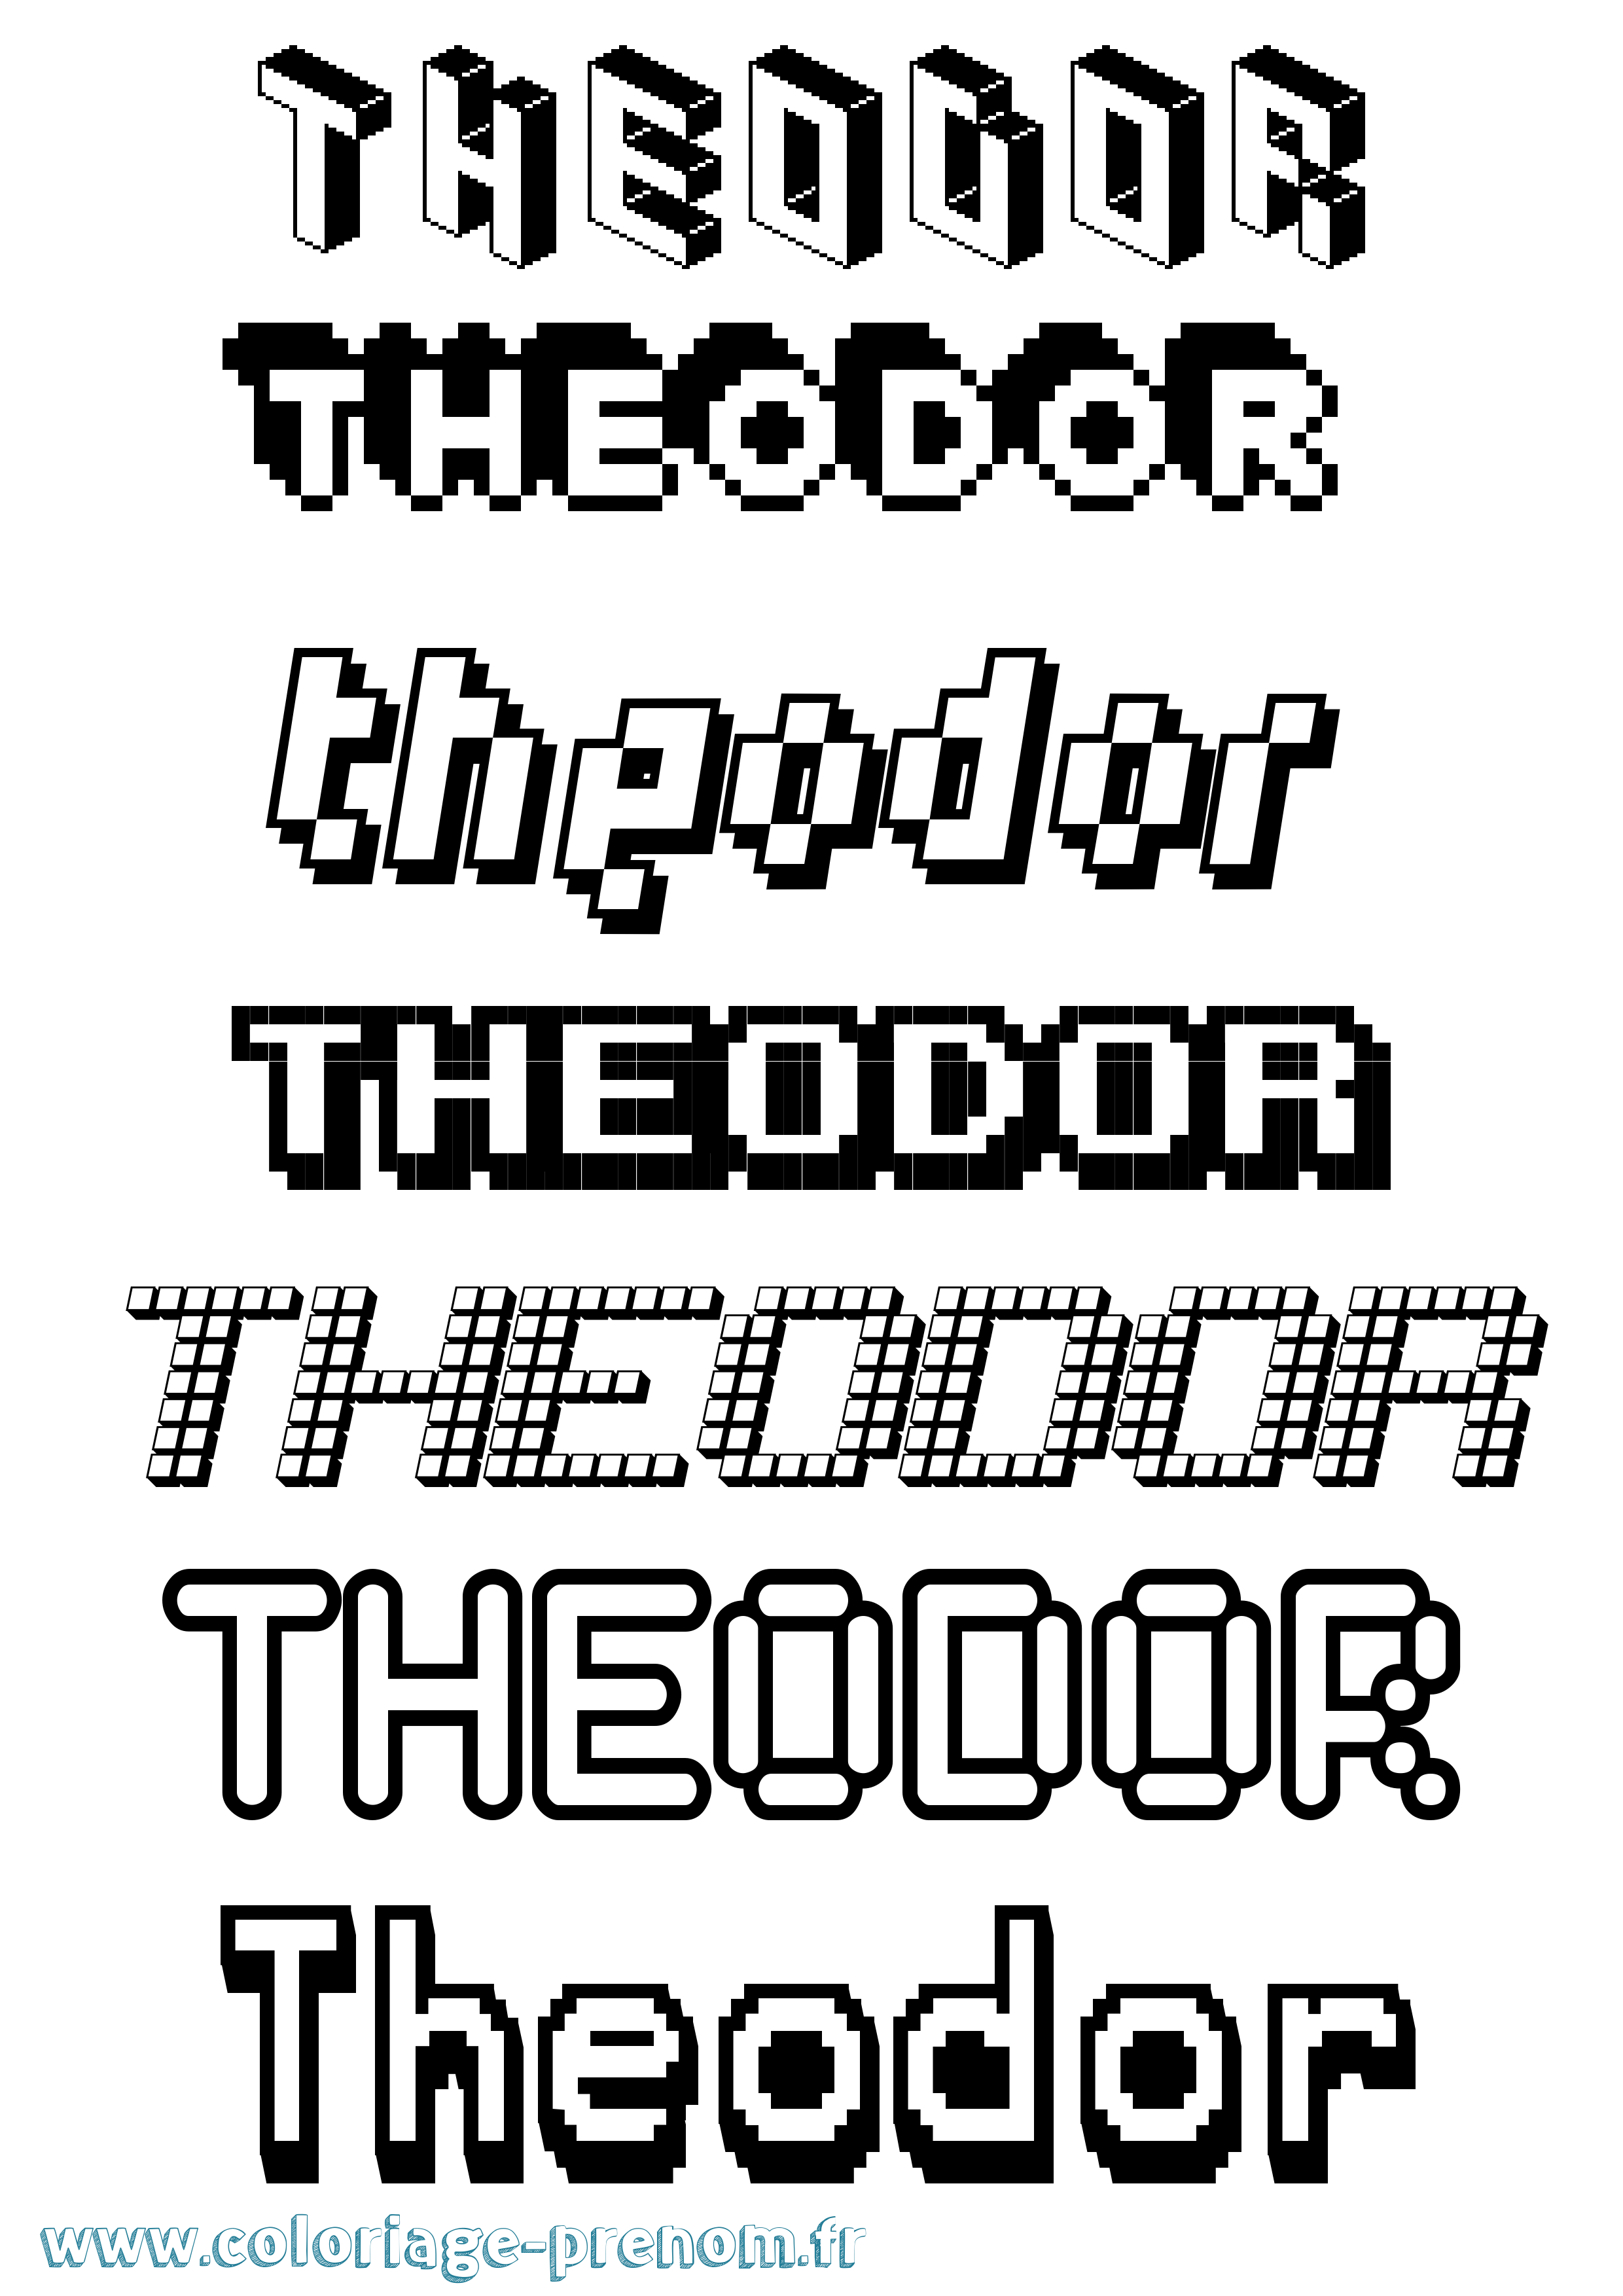 Coloriage prénom Theodor Pixel